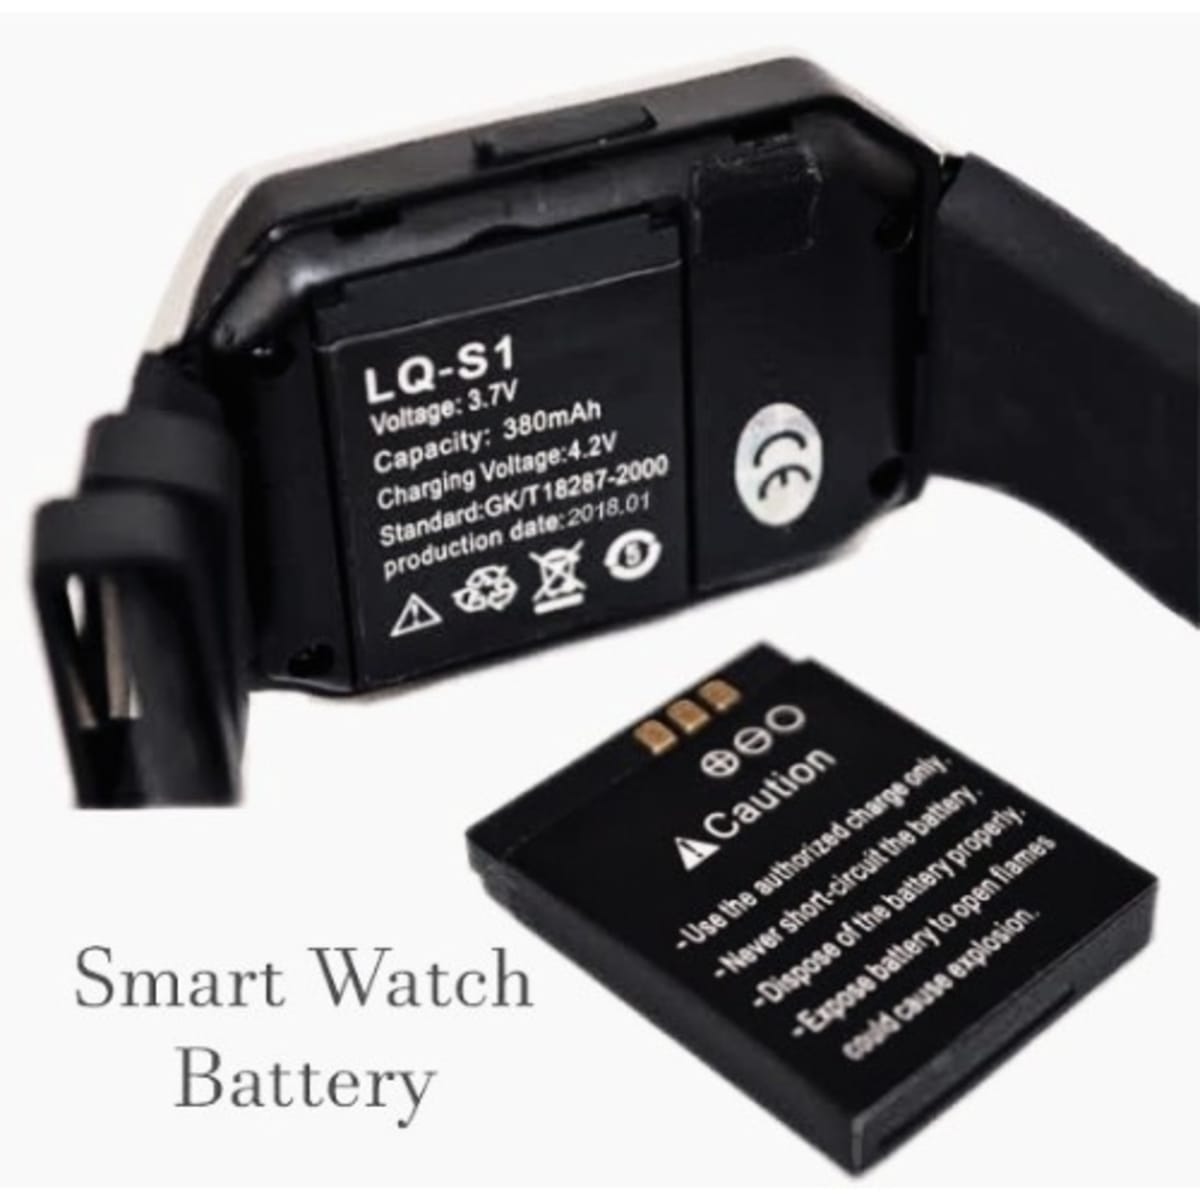 Час battery. Аккумулятор LQ-s1 380mah. LQ s1 смарт часы. Аккумуляторная батарея LQ s1. Аккумулятор для Smart часов LQ-s1.